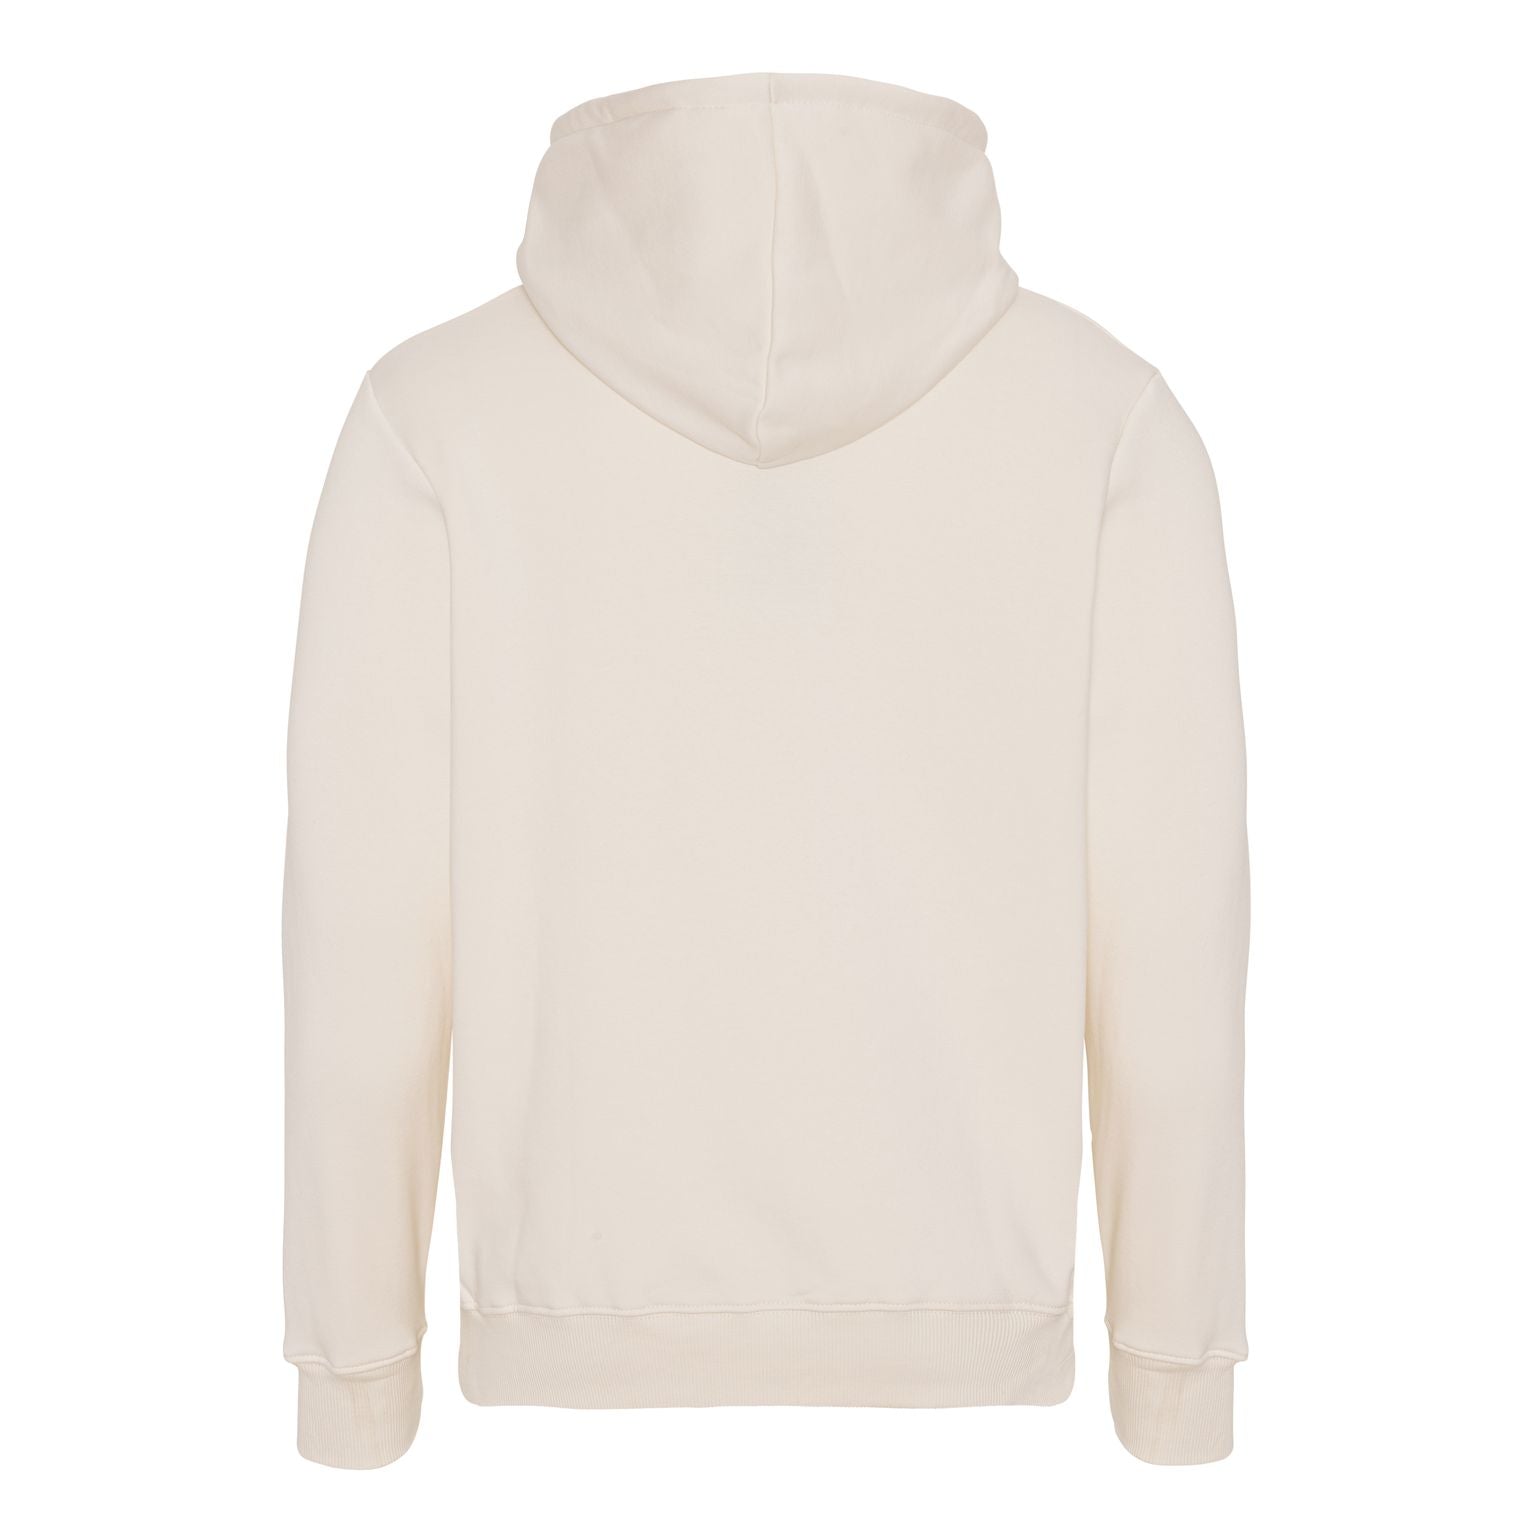 Offwhite hoodie